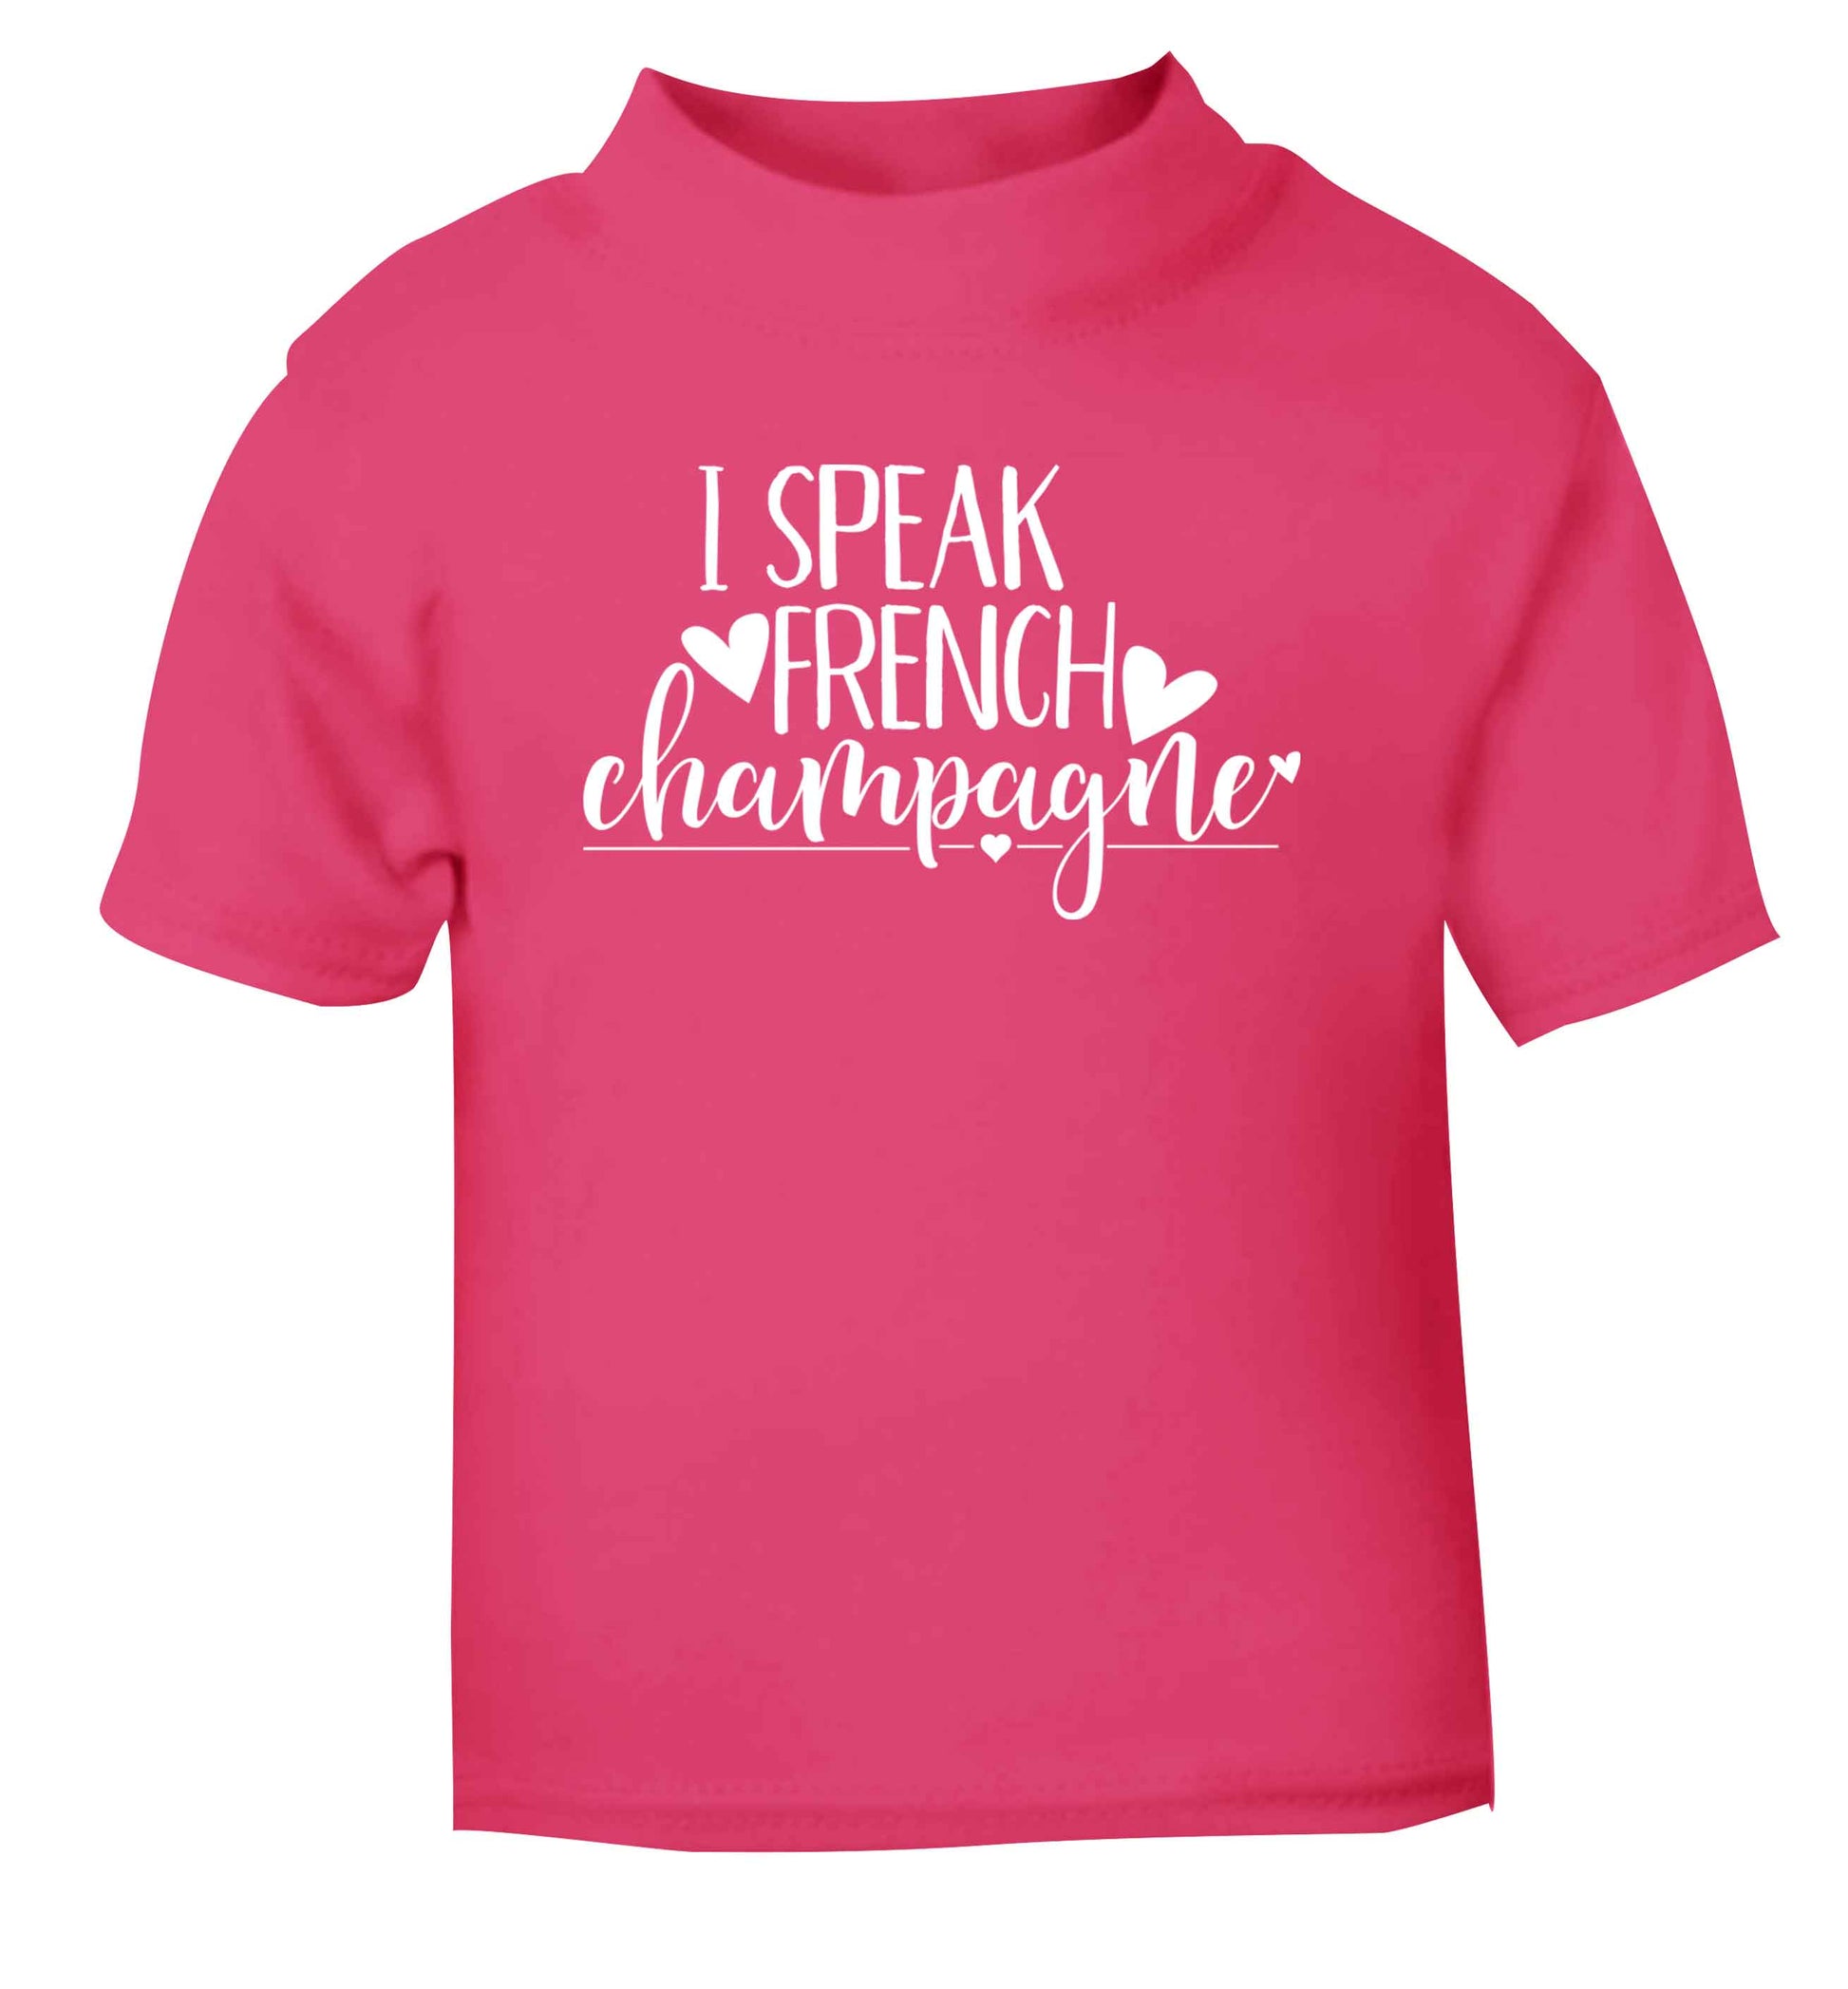 I speak french champagne pink Baby Toddler Tshirt 2 Years